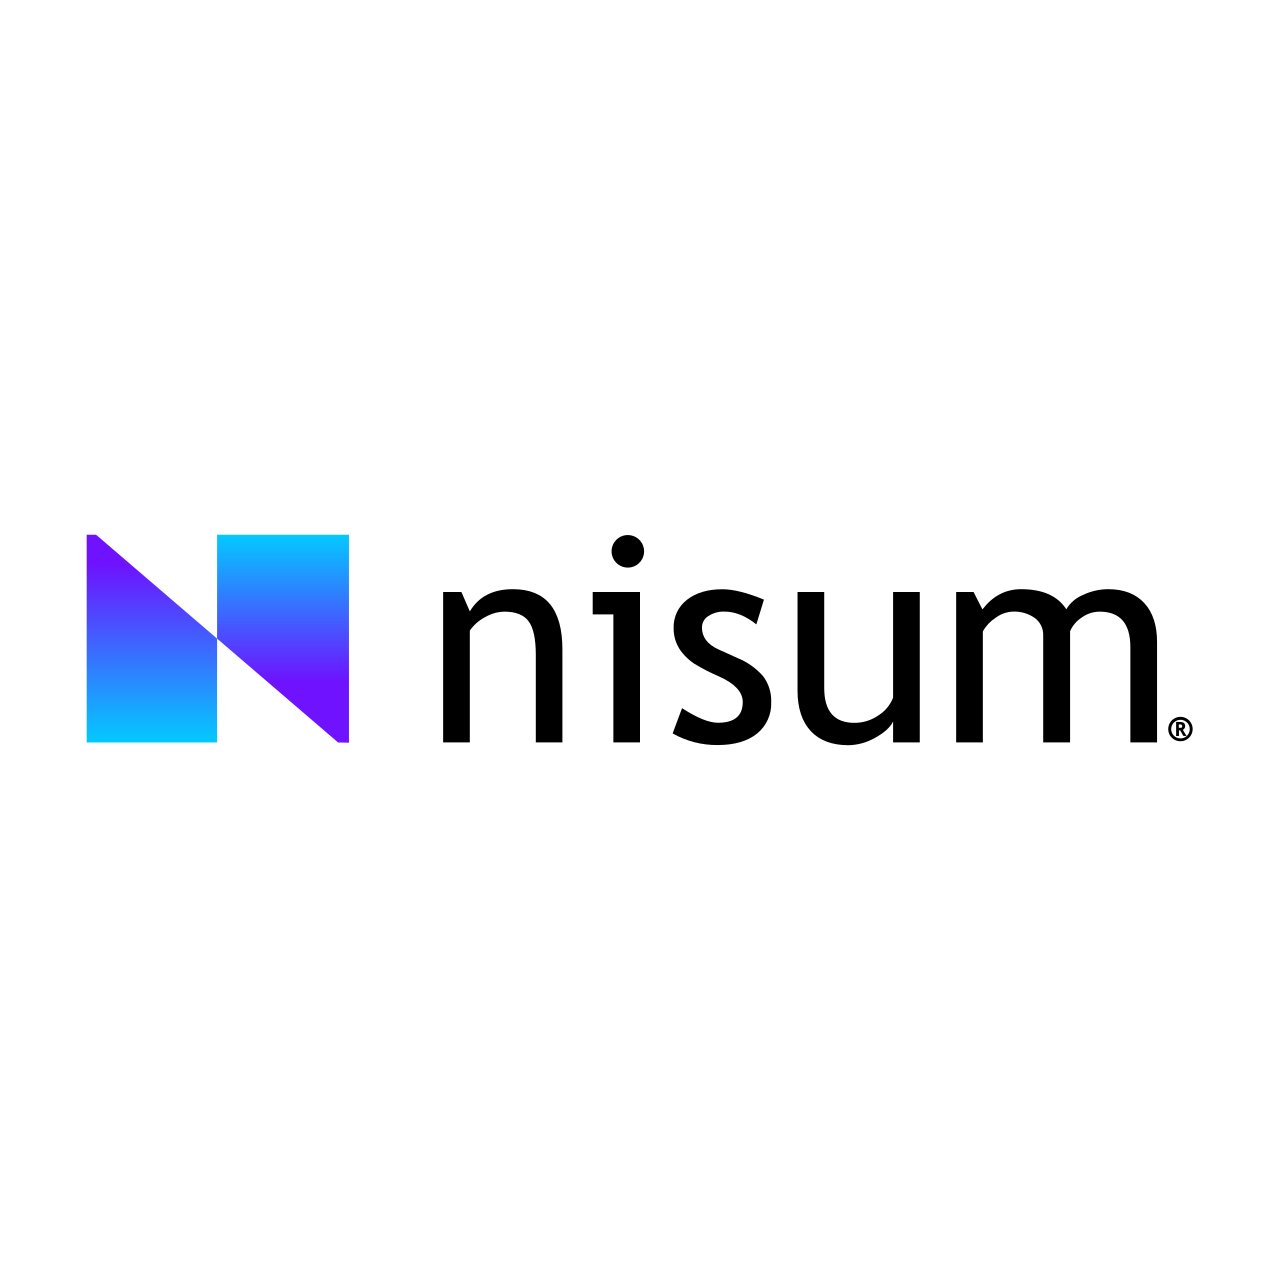 Nisum